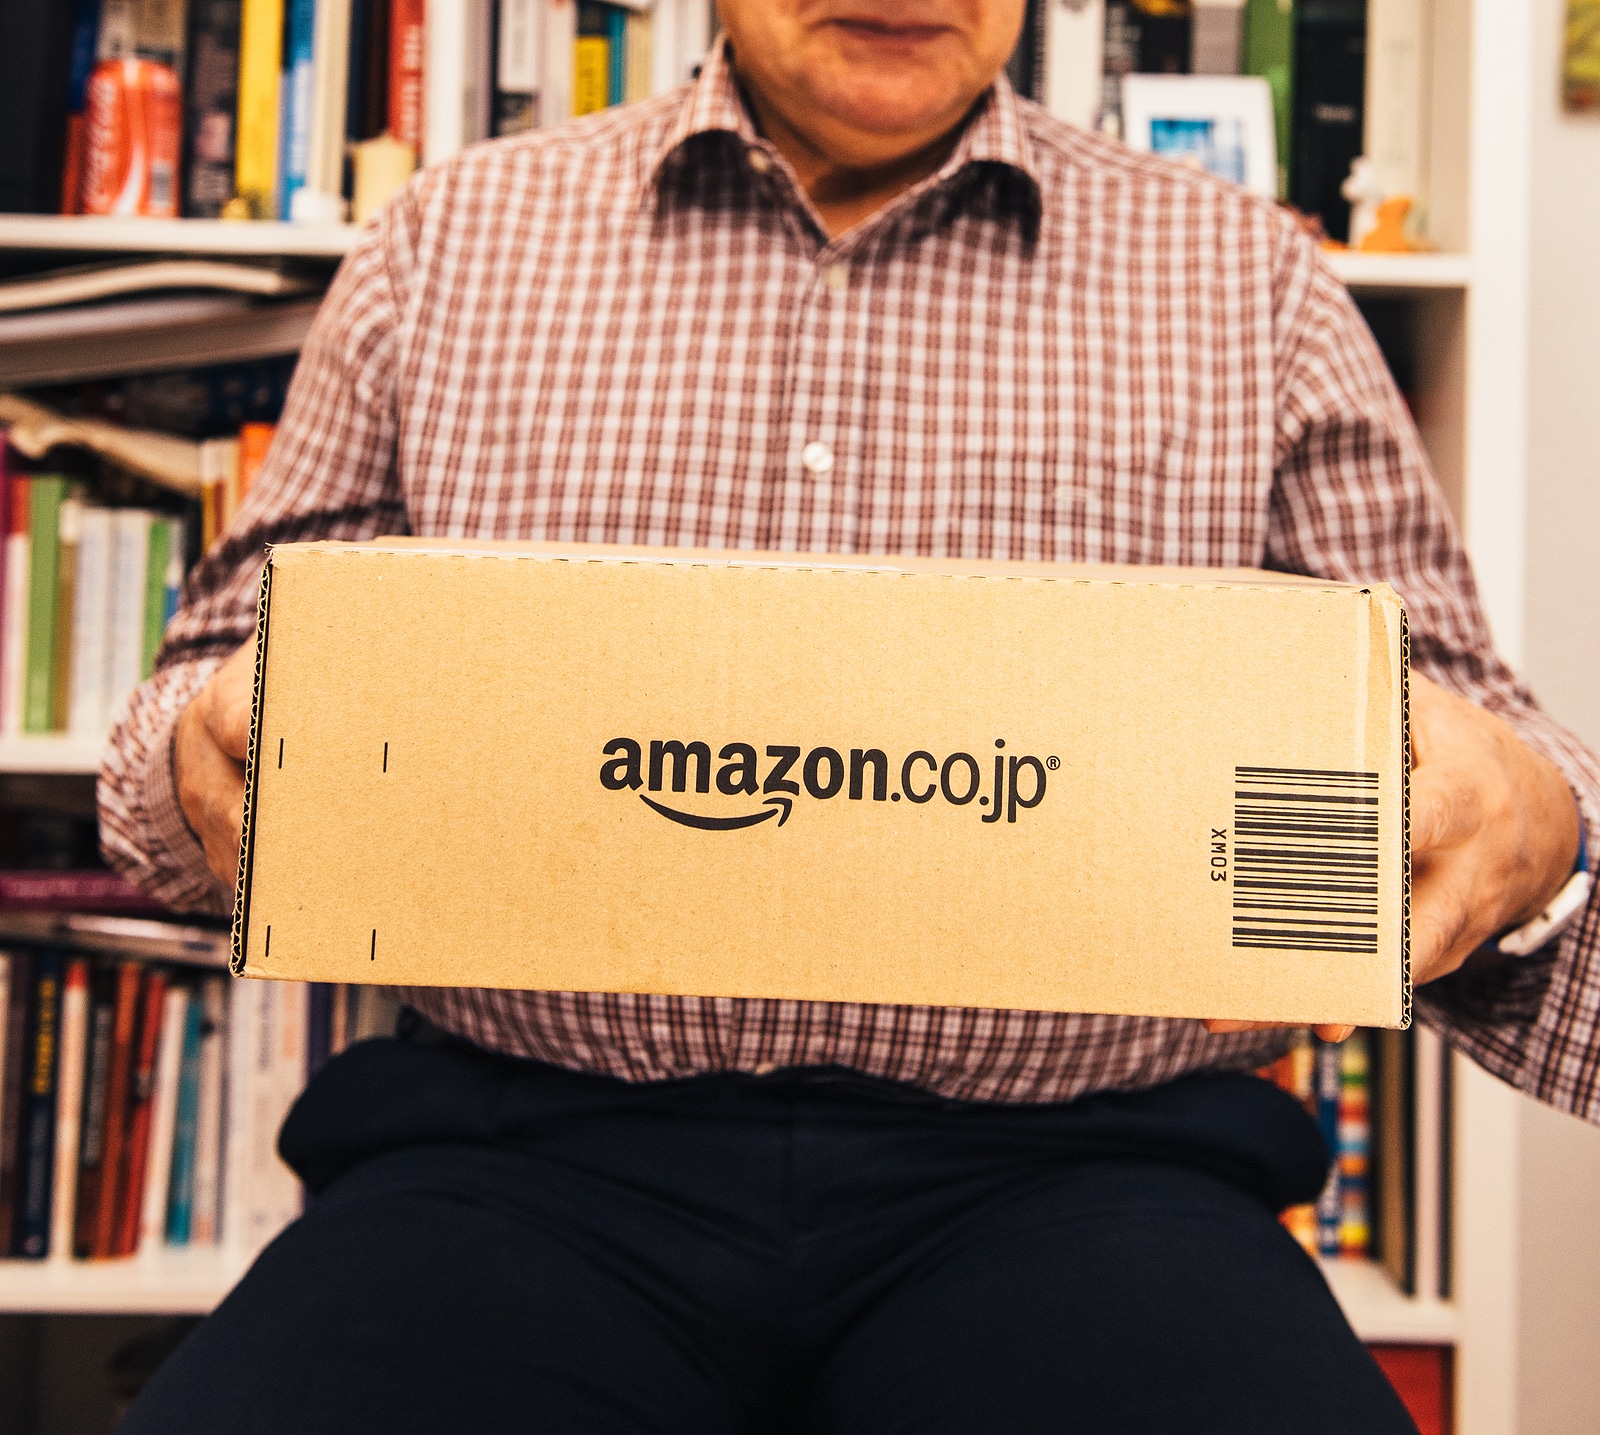 Bizarre Amazon Product Reviews Part II